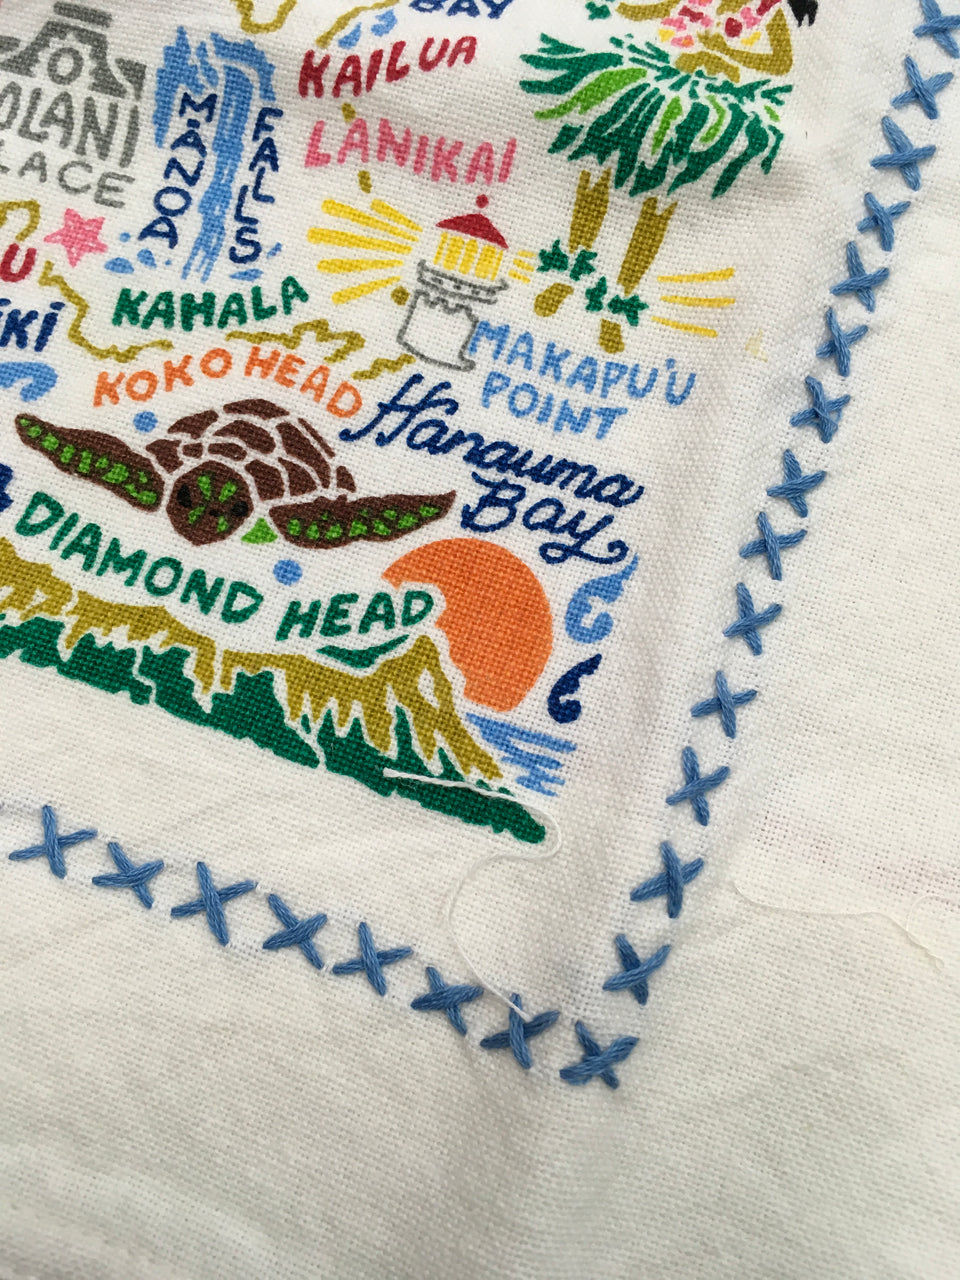 Close up of dishtowel print daimond head